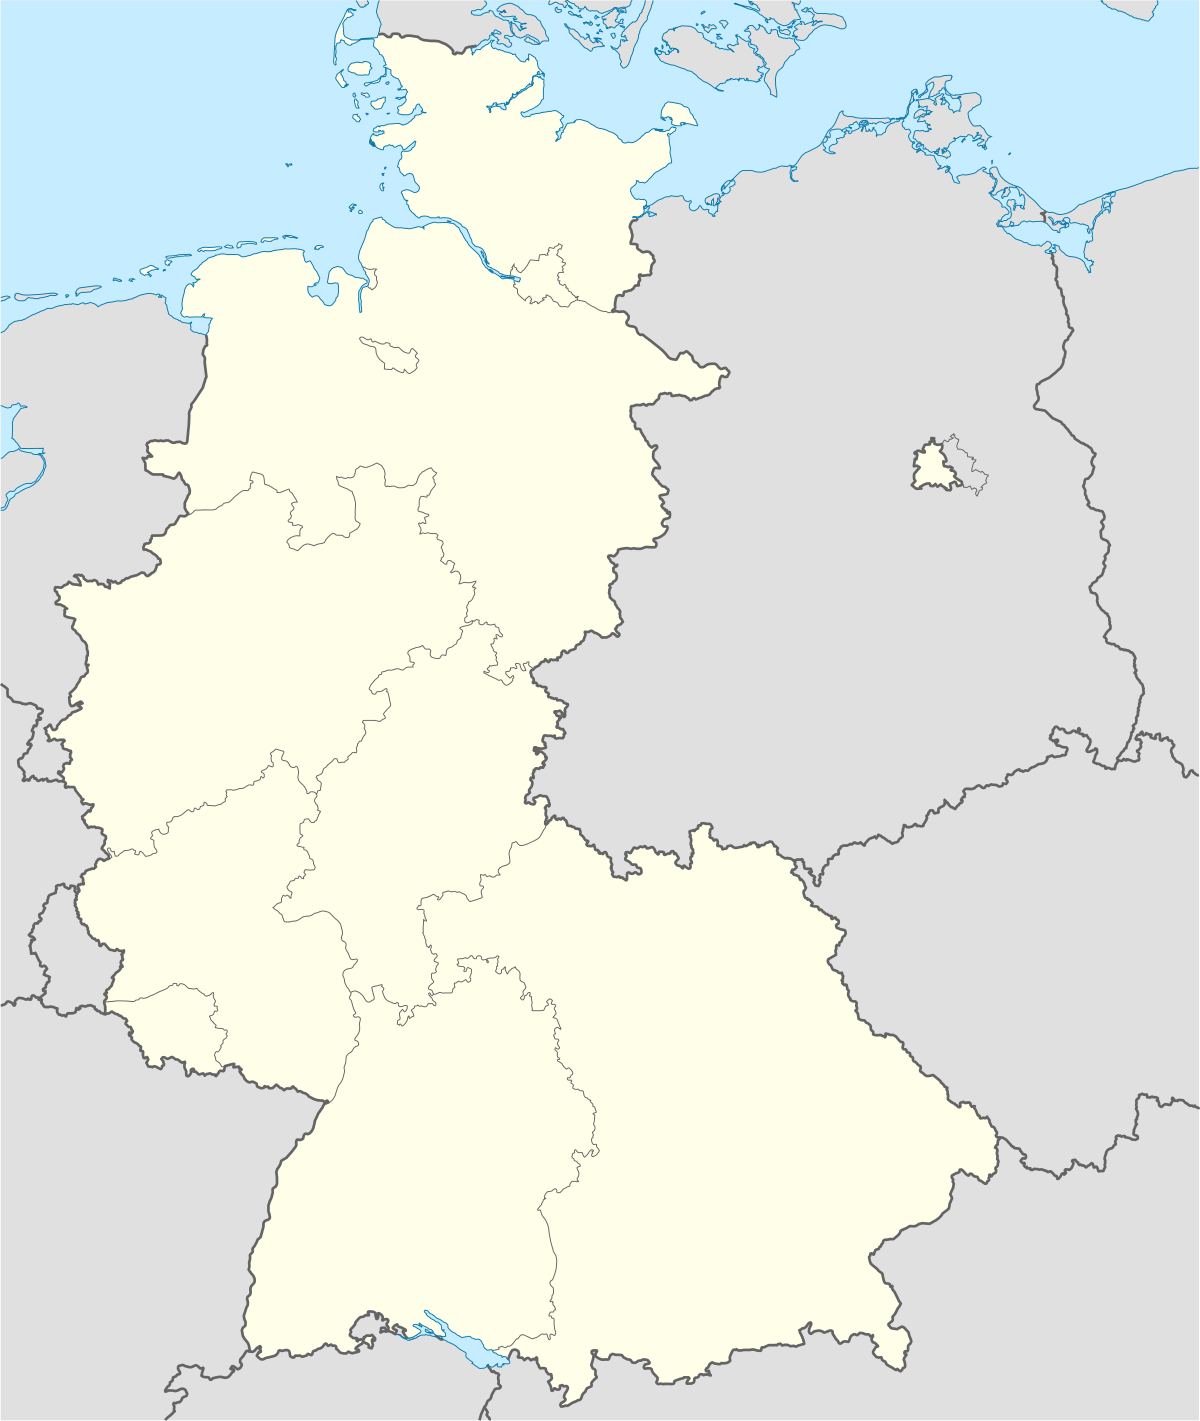 Noclador/sandbox/SAM Belt 1989 is located in FRG and West Berlin